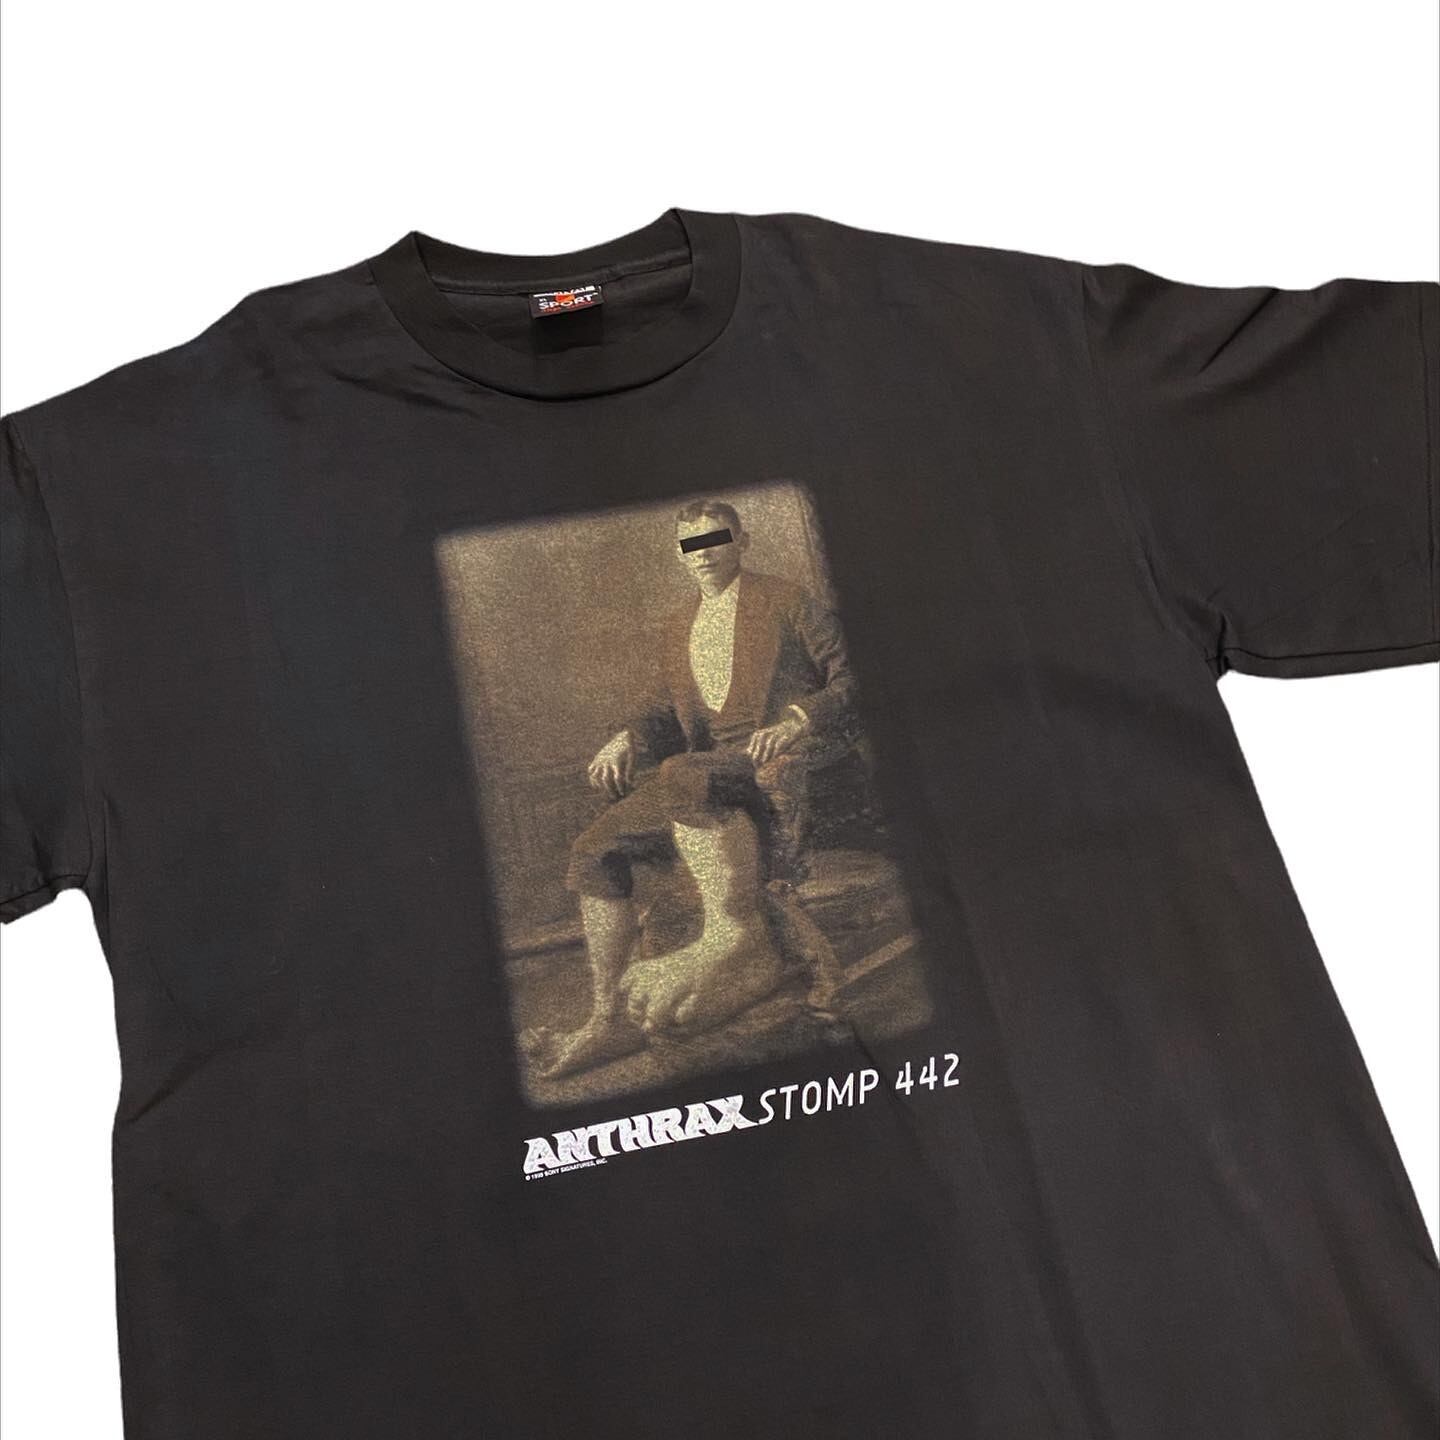 ANTHRAX tシャツ STOMP 442 ©1995 希少